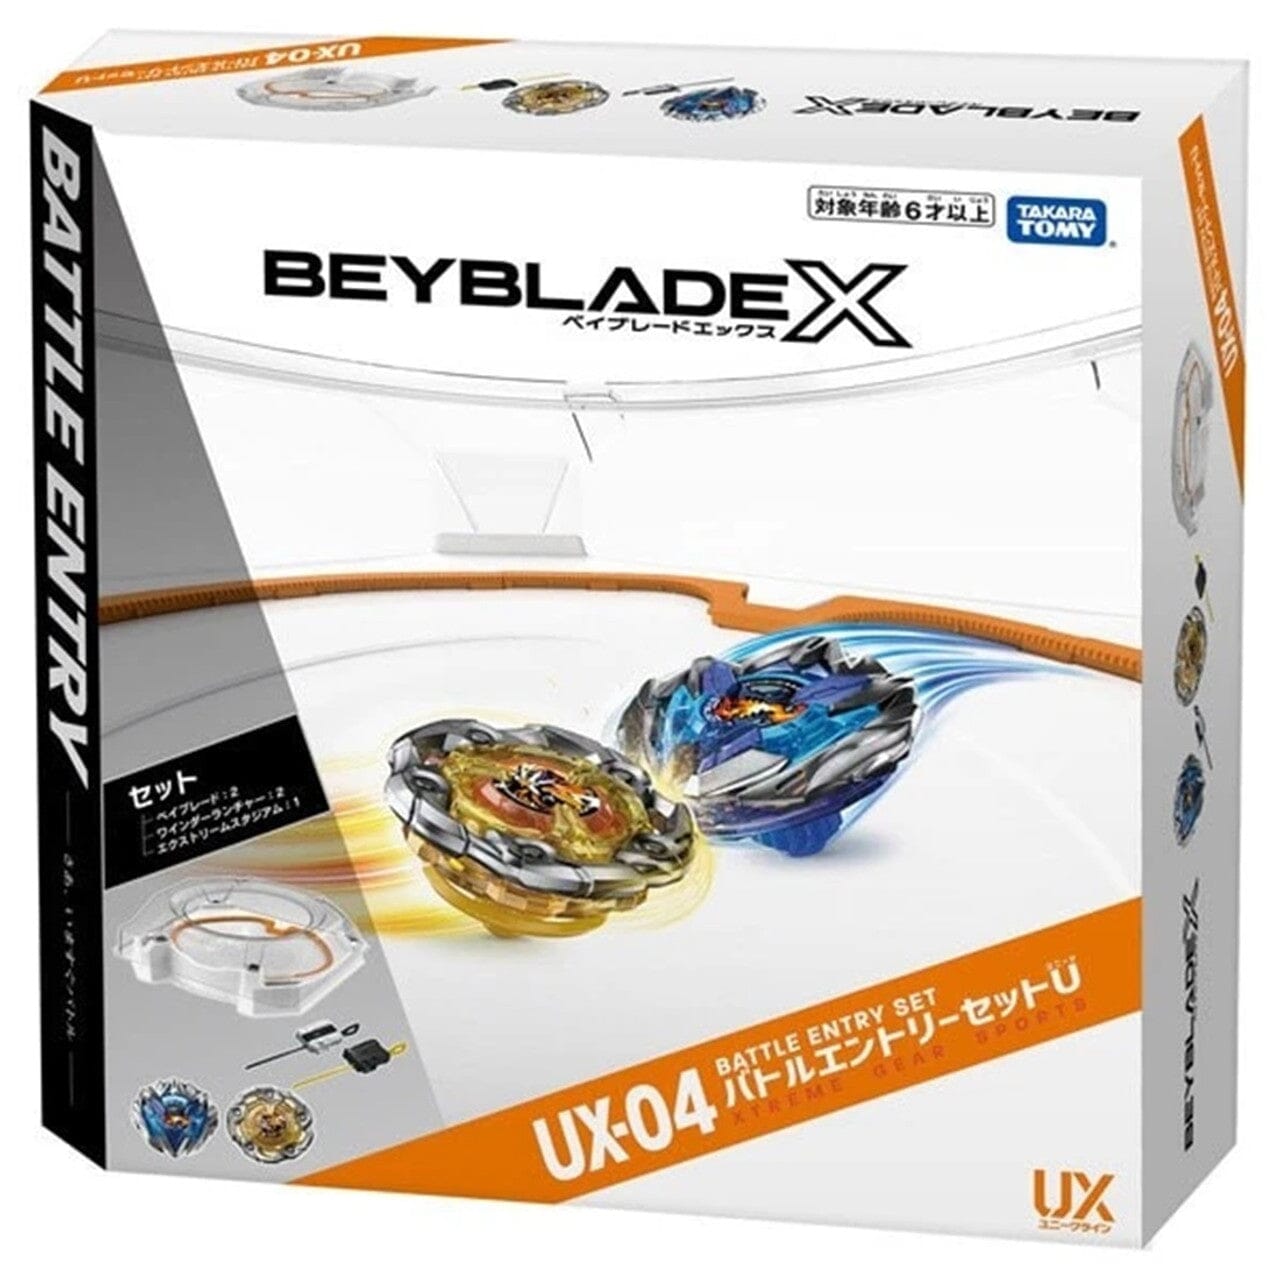 [PRE-ORDER 8TH MAY] Beyblade X UX-04 Battle Entry Set U BGL Hobbies